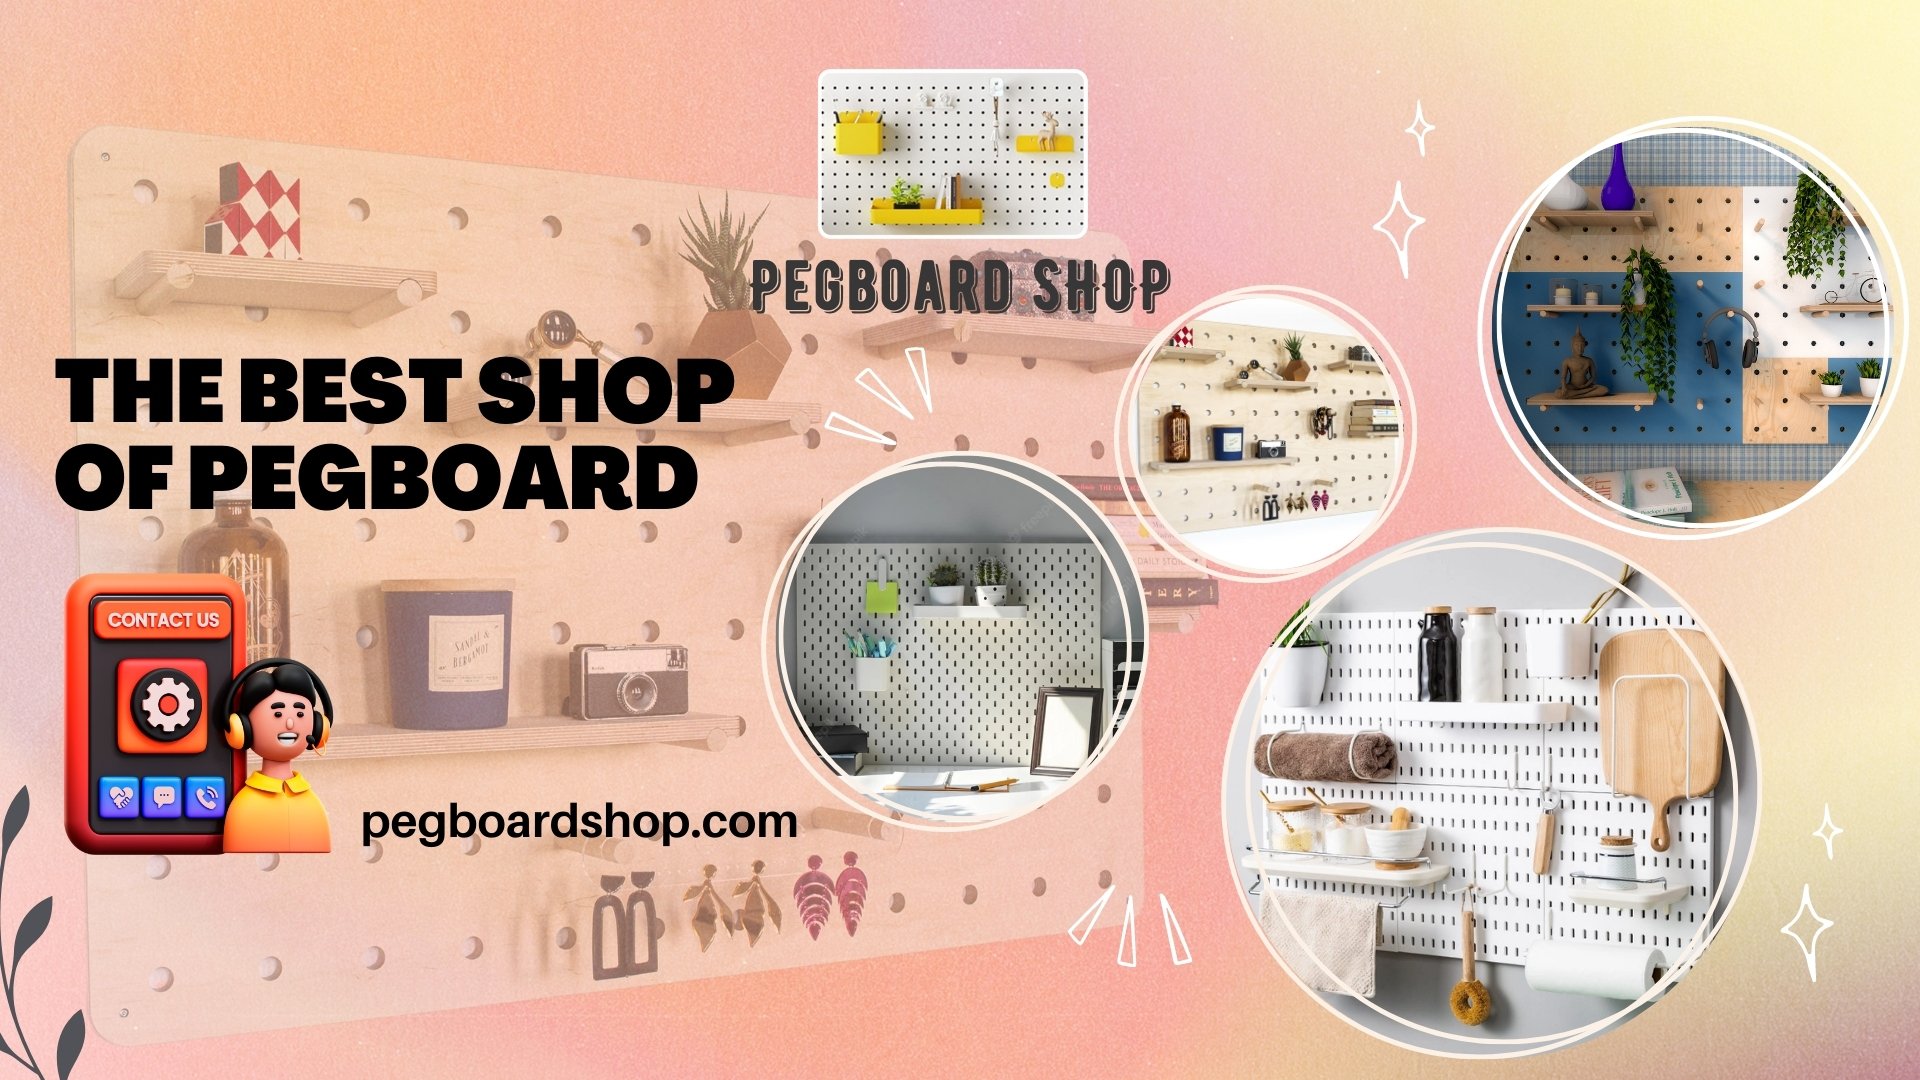 PEGBOARD SHOP BANNER - Pegboard Shop